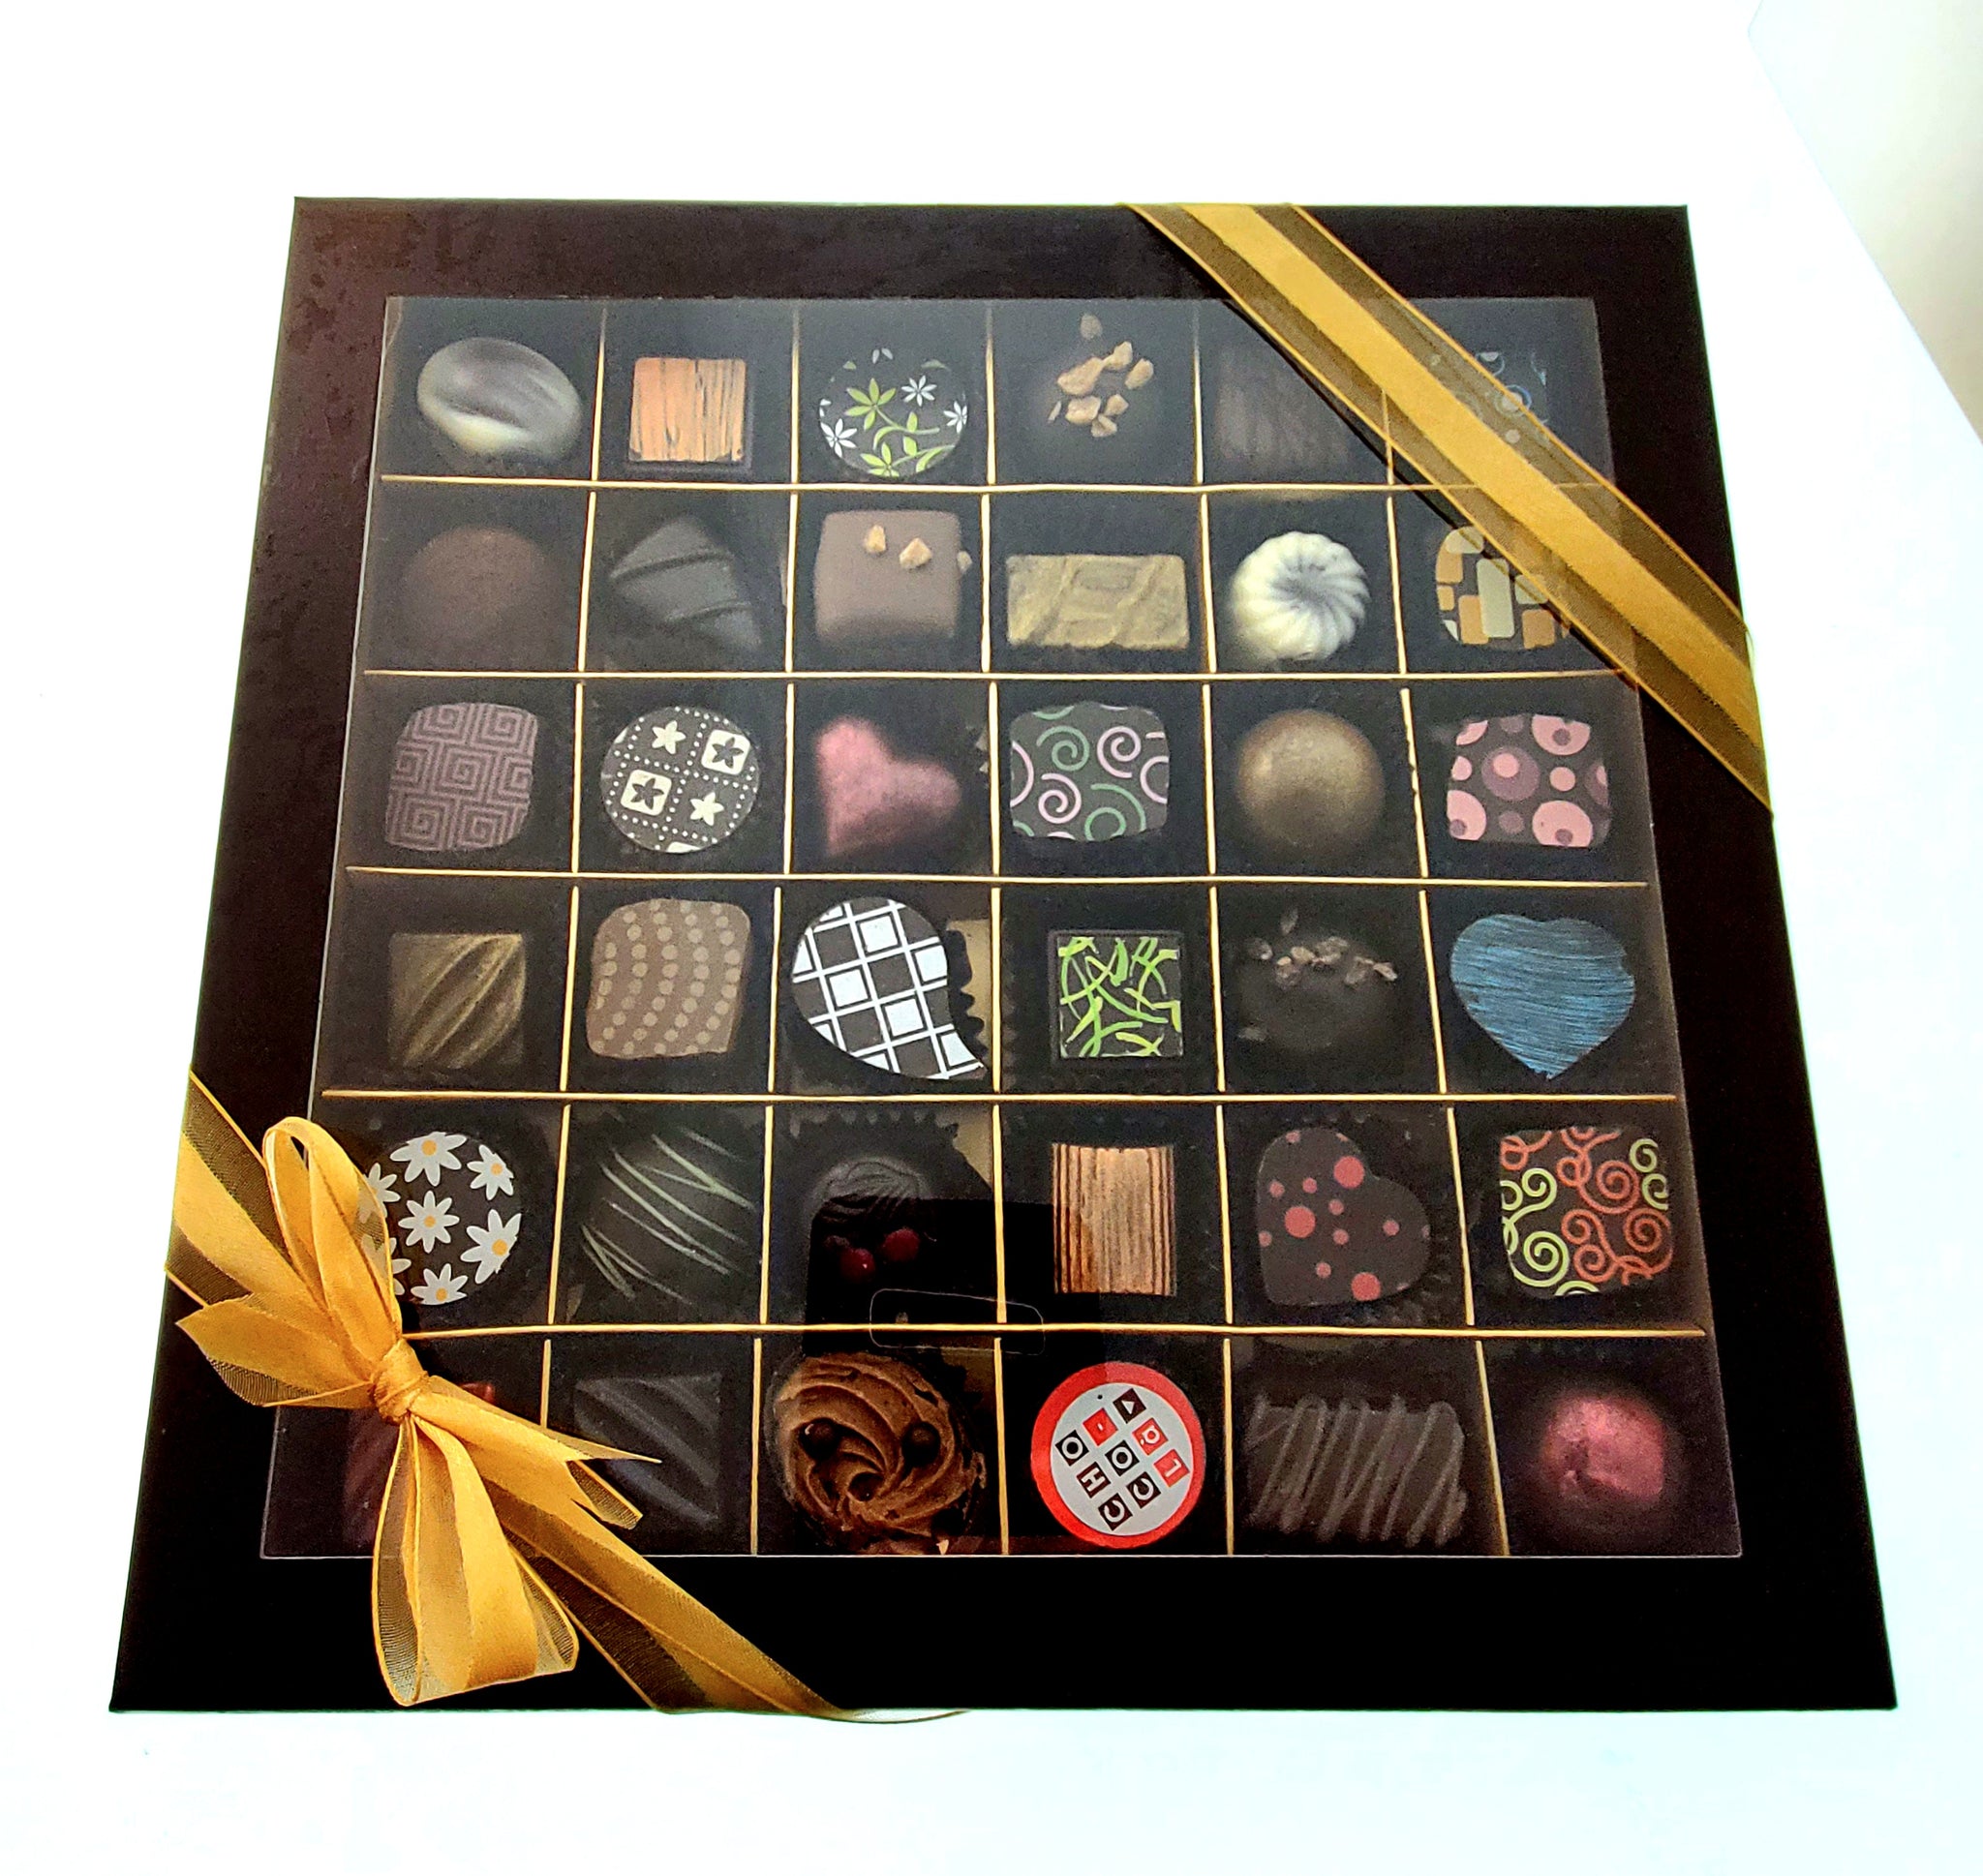 Boîte de luxe 36 chocolats – Choco-Là